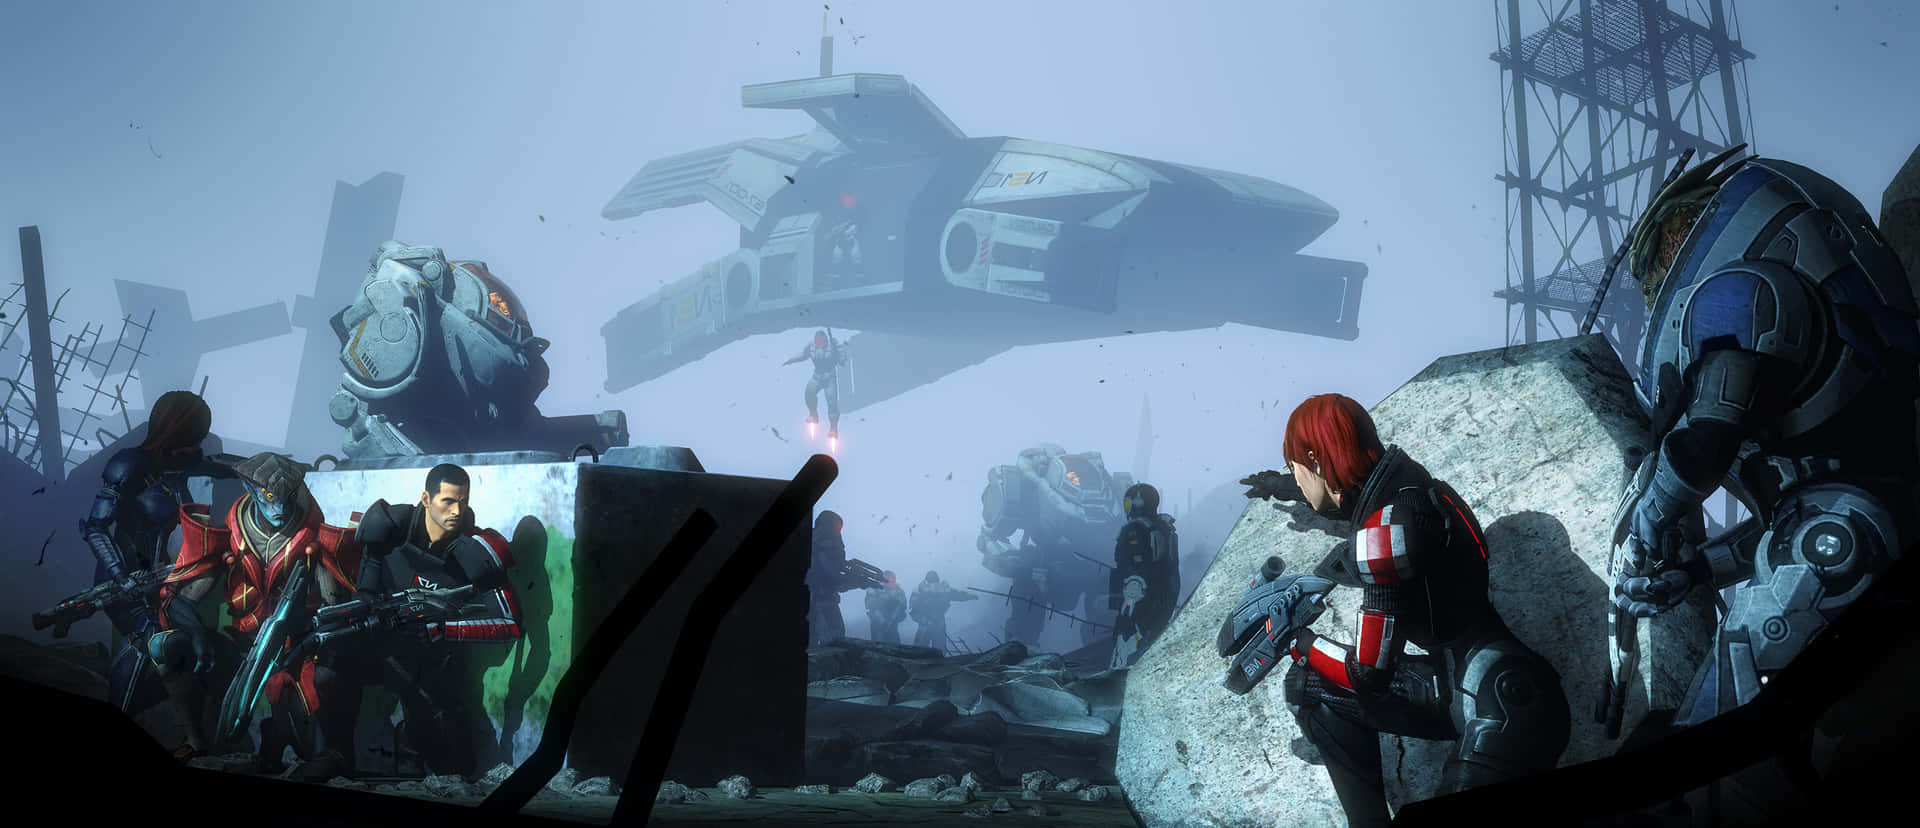 Mass Effect Cerberus - The Illusive Organization in Action Wallpaper